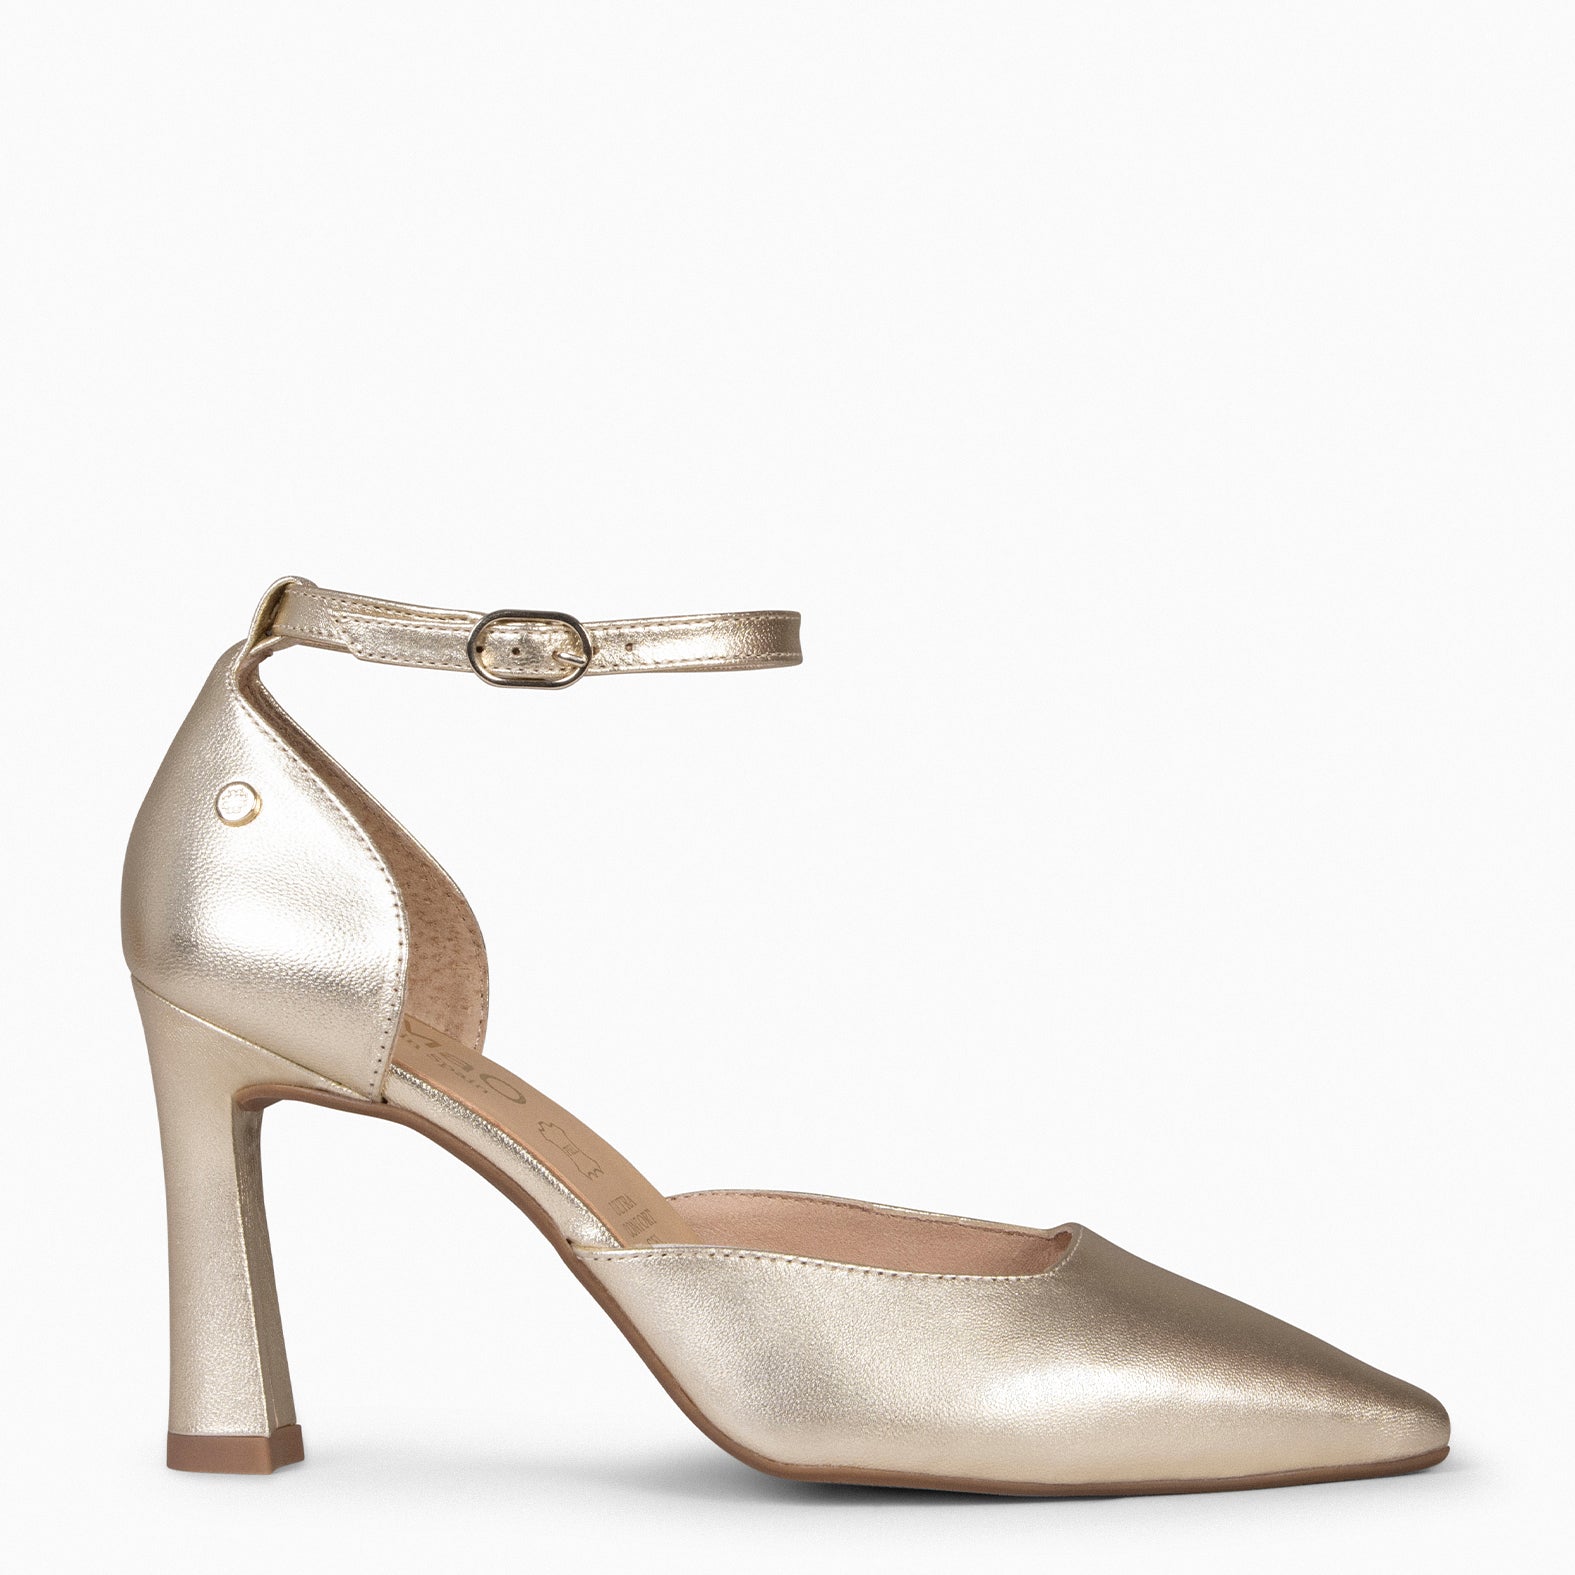 AINHOA – GOLDEN elegant heels